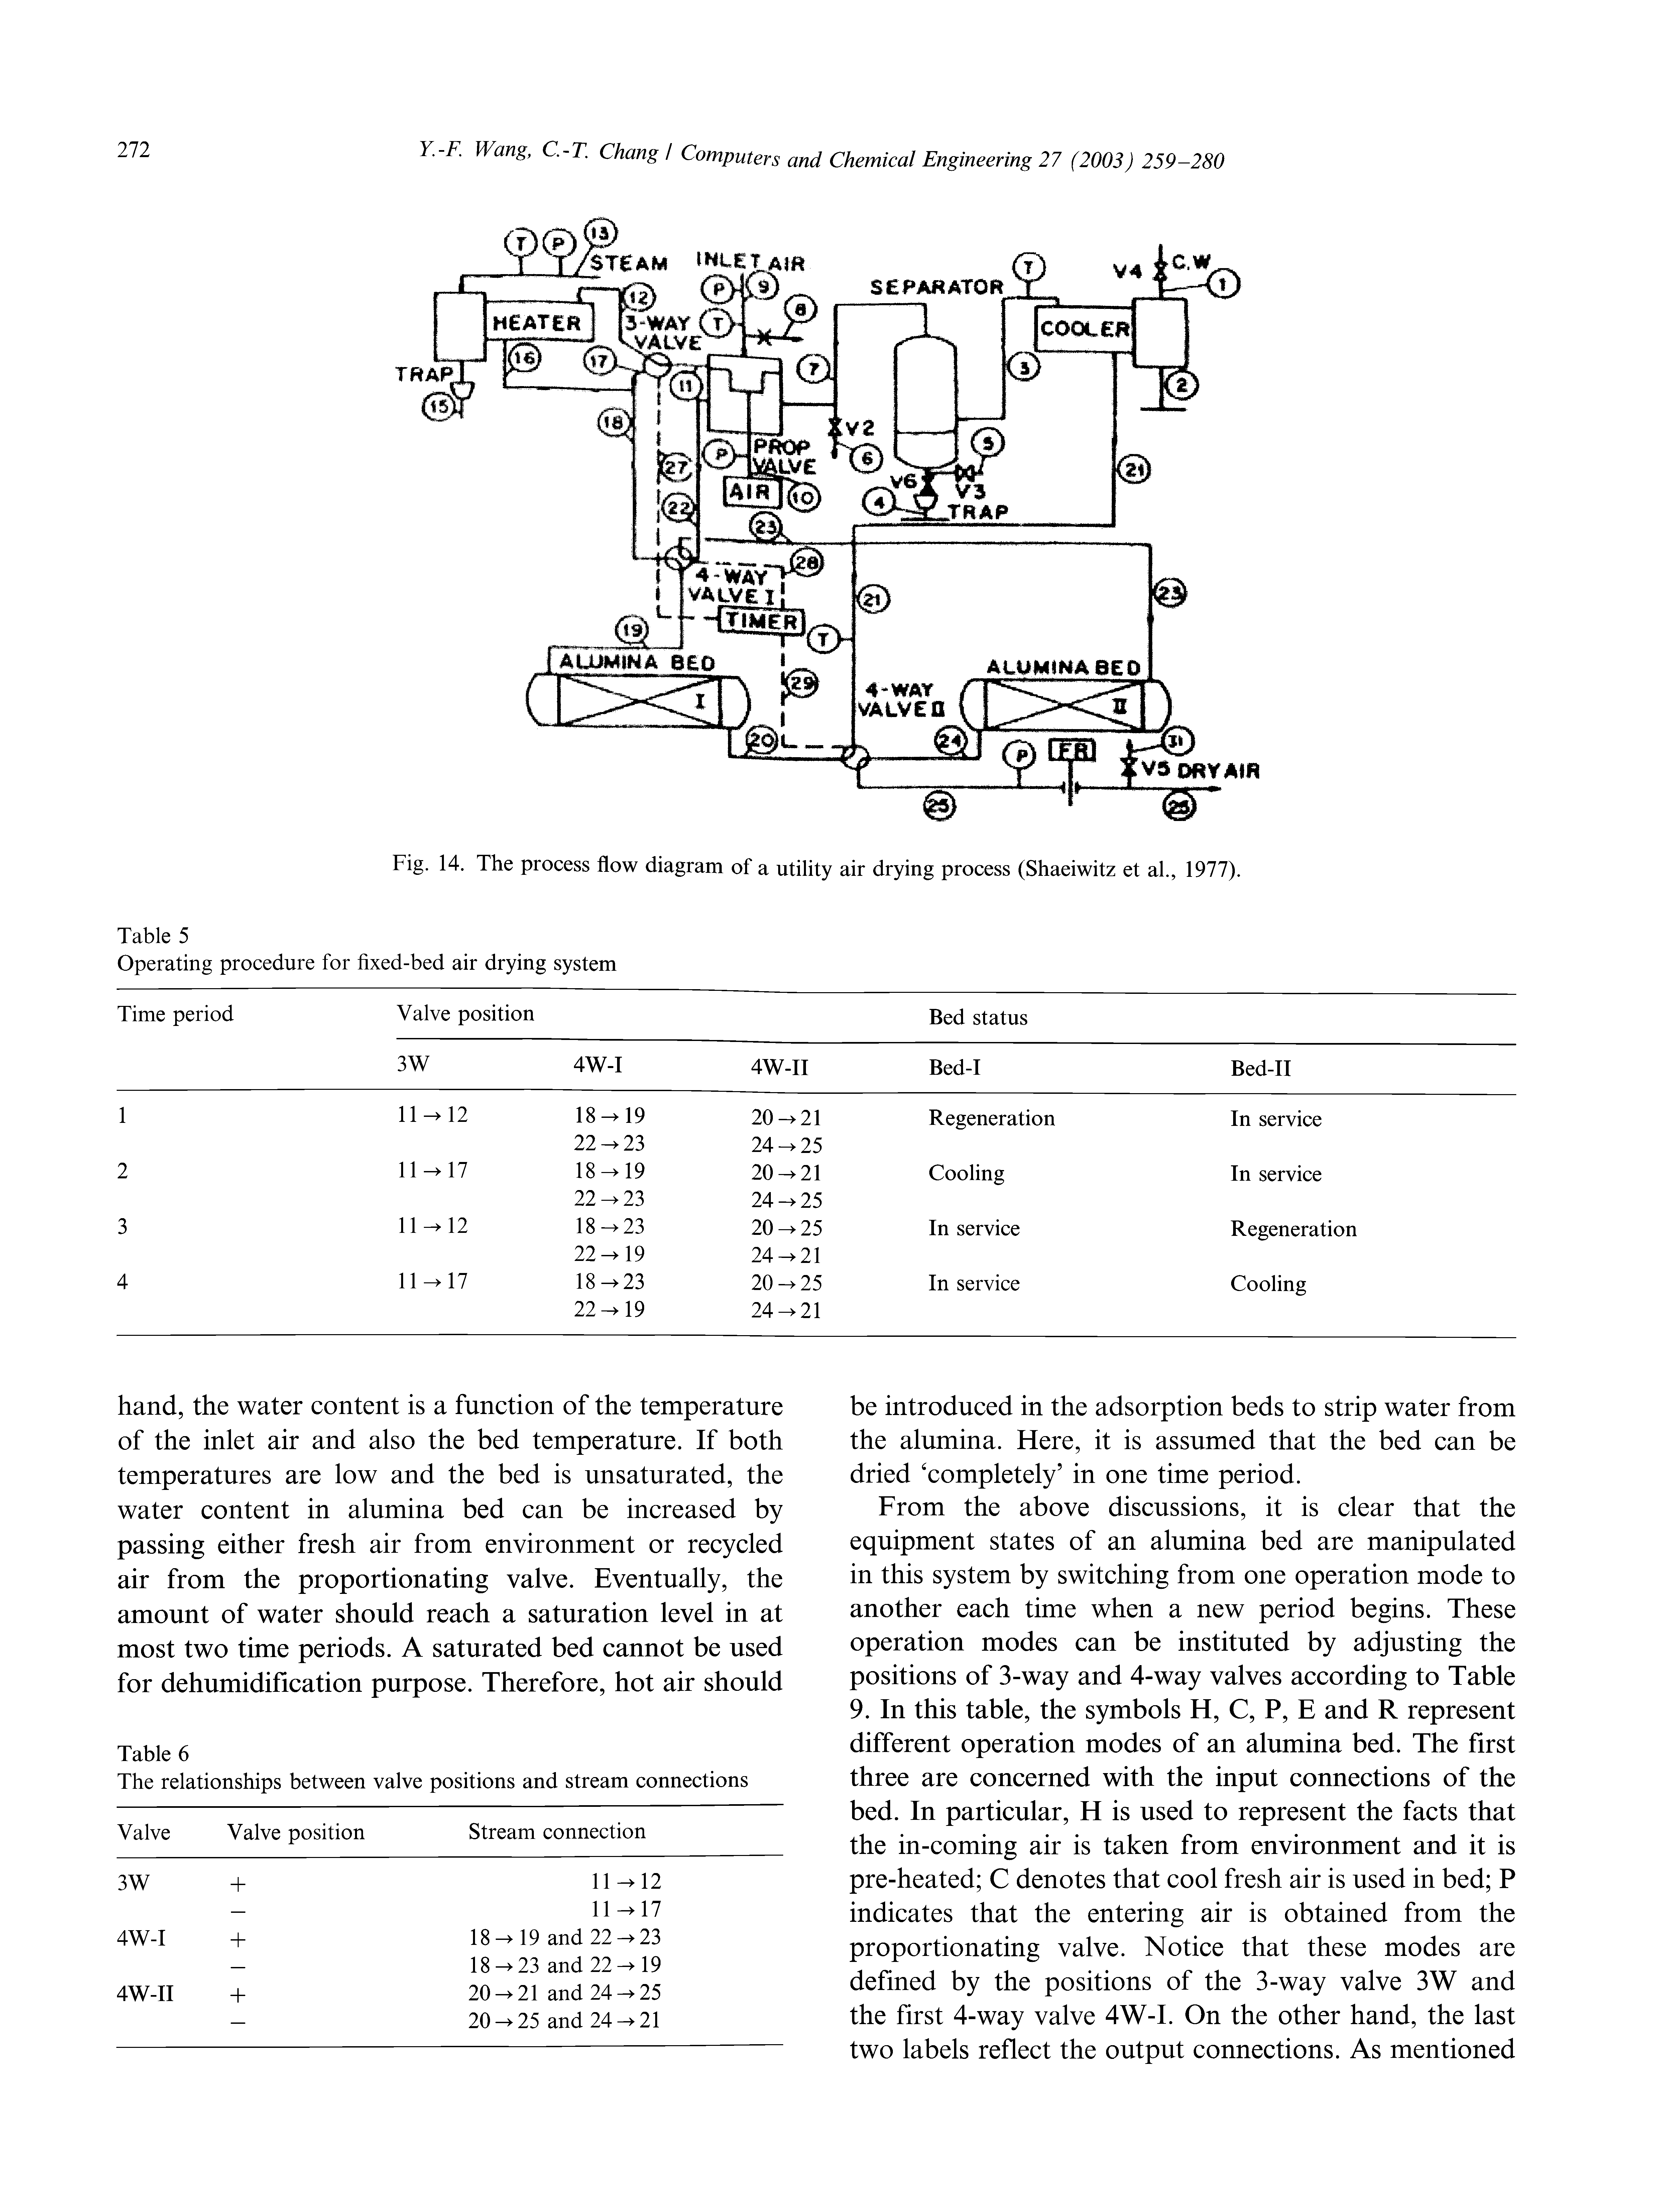 Fig. 14. The process flow diagram of a utility air drying process (Shaeiwitz et al., 1977).